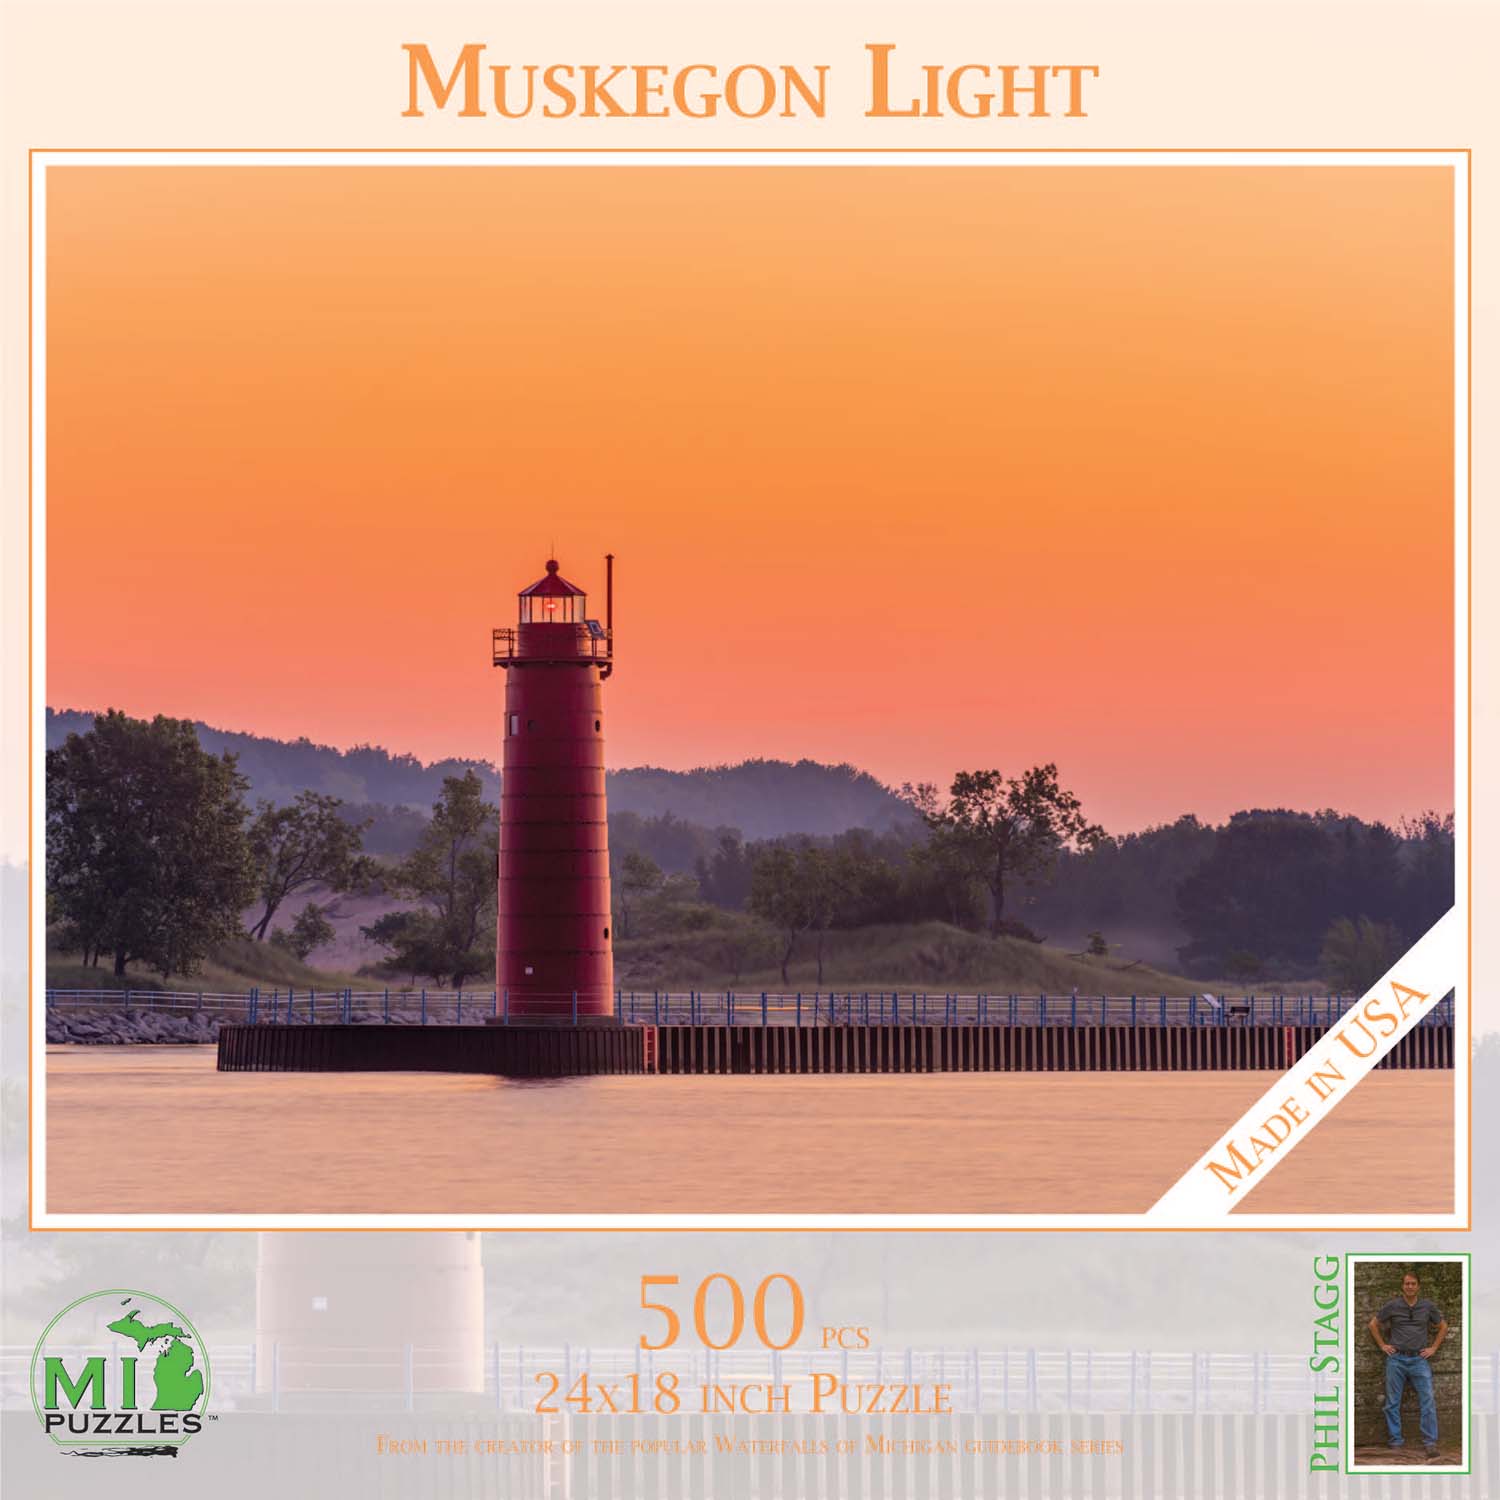 Muskegon Light